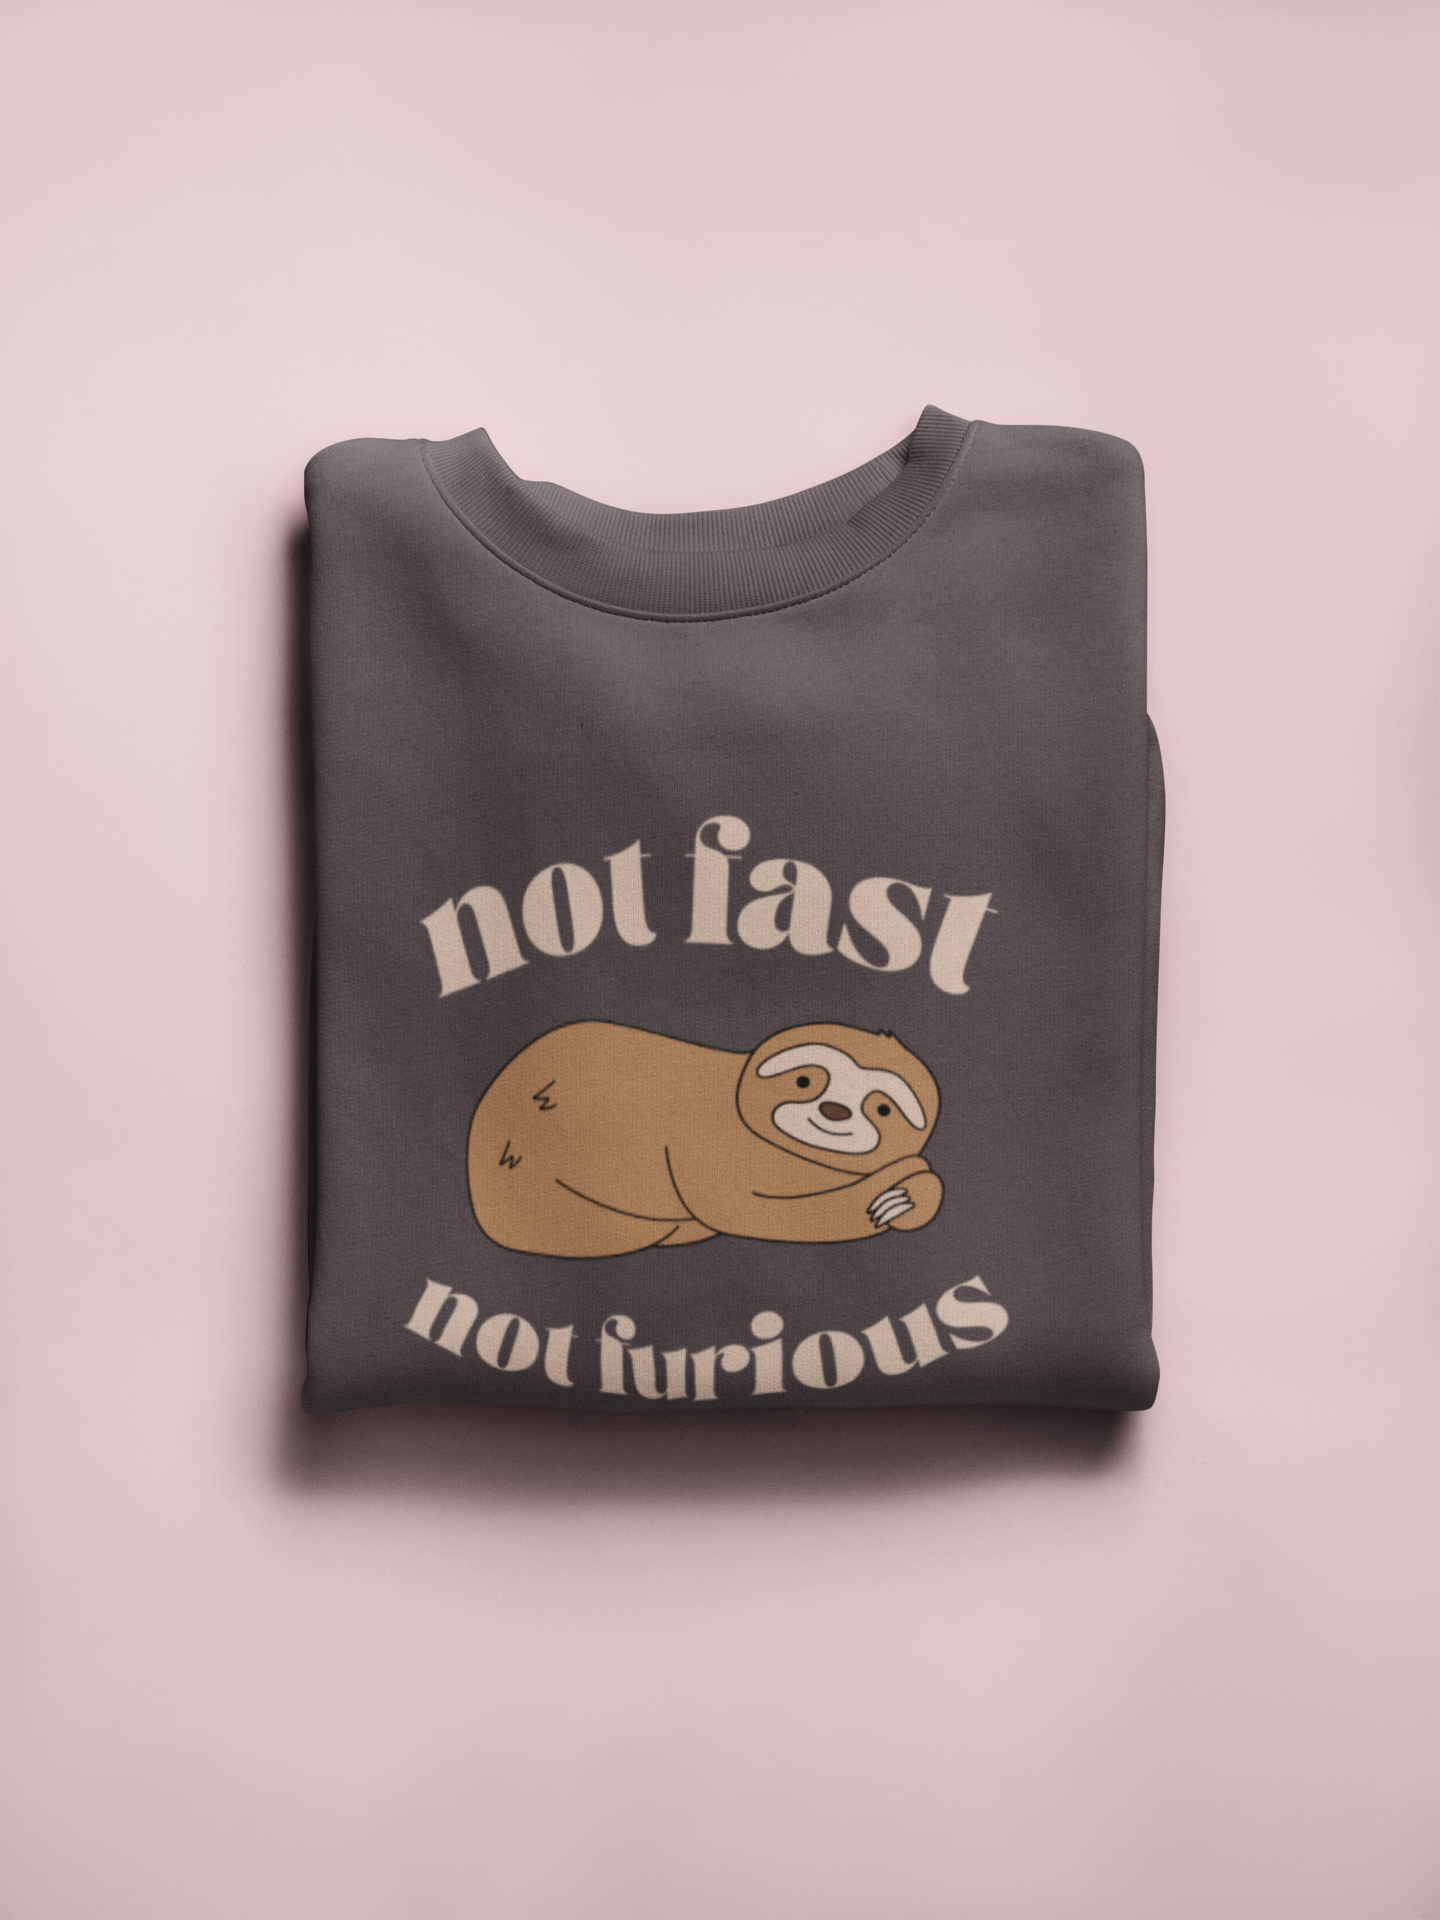 Not fast not furious sweatshirt